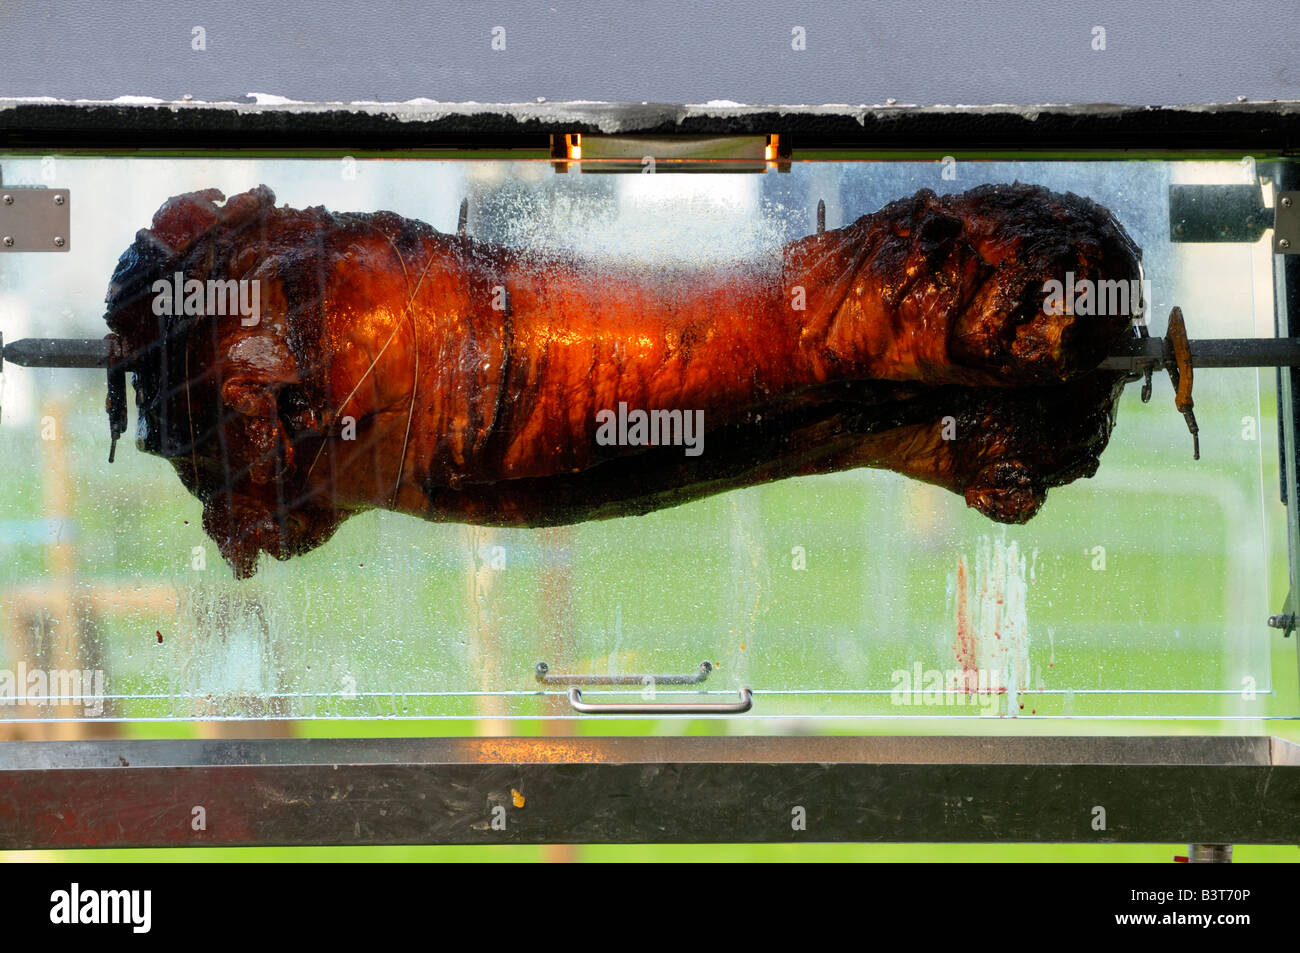 A pig on a spit roast Stock Photo